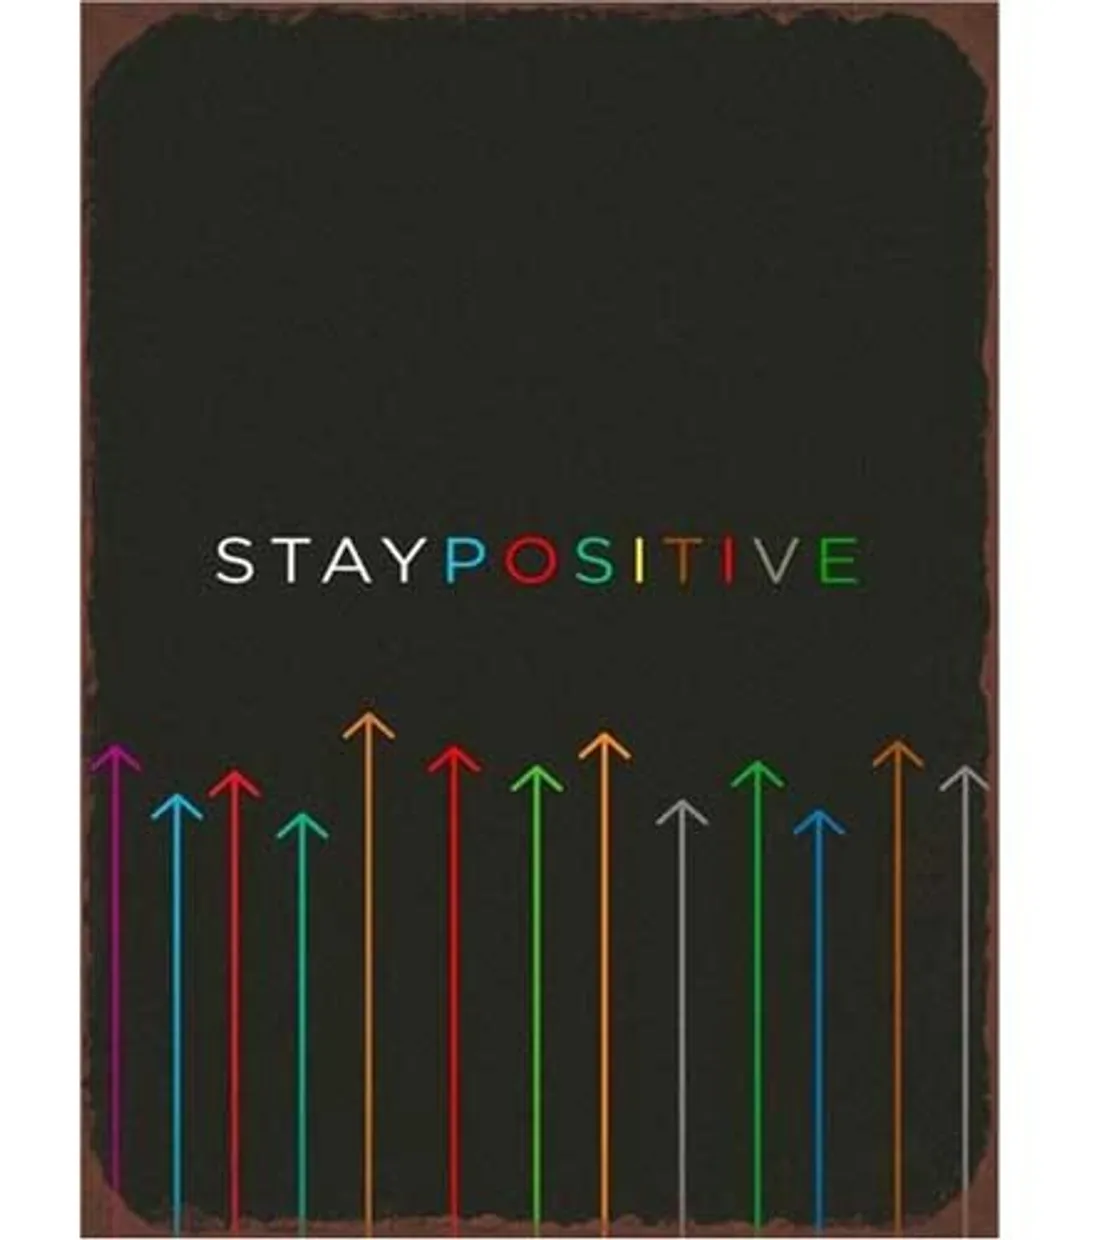 Tekstbord: "Stay Positive"